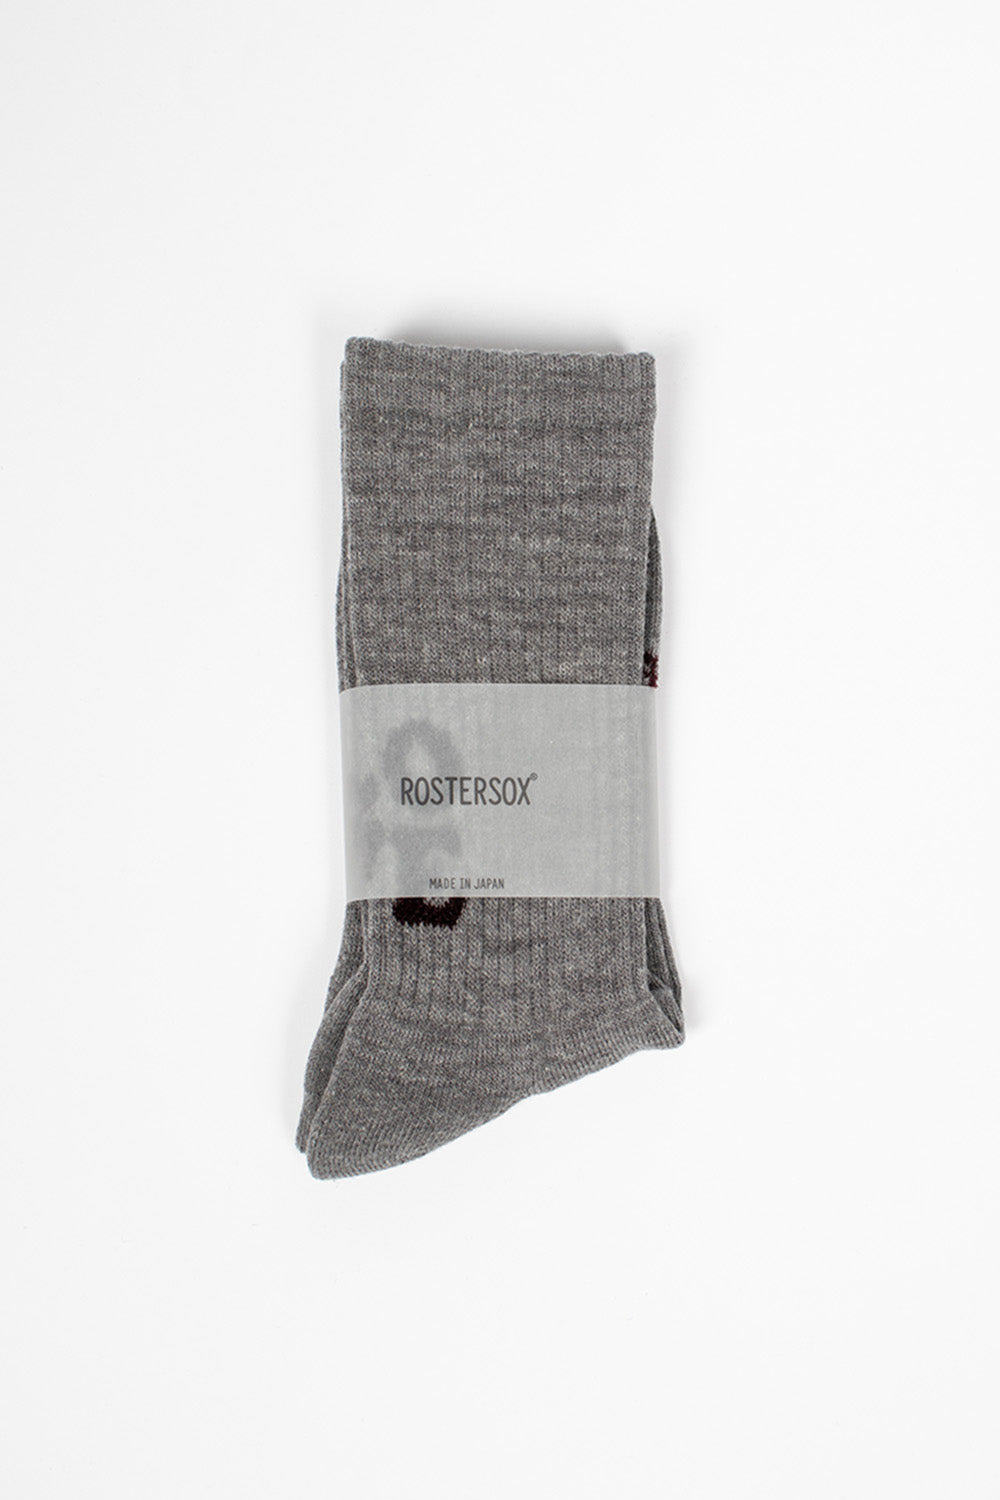 RS-276 Love Socks Grey